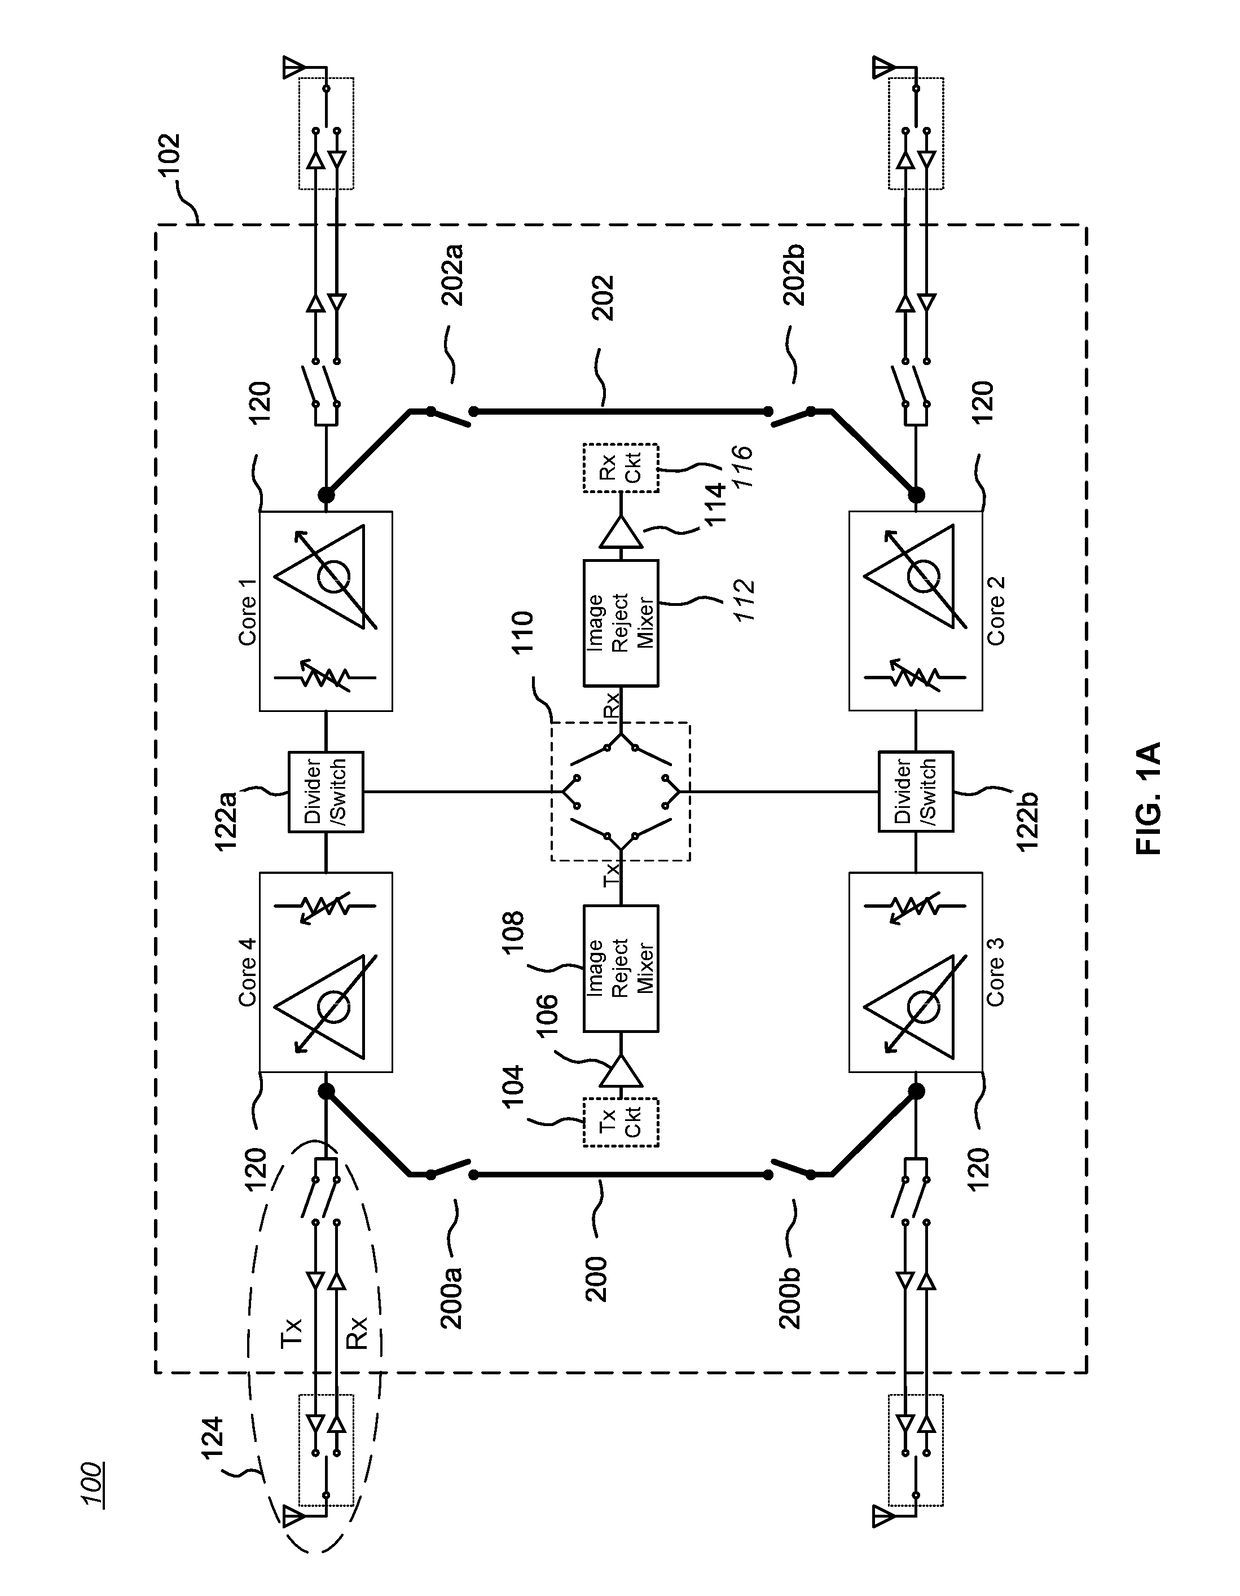 Integrated circuit calibration architecture